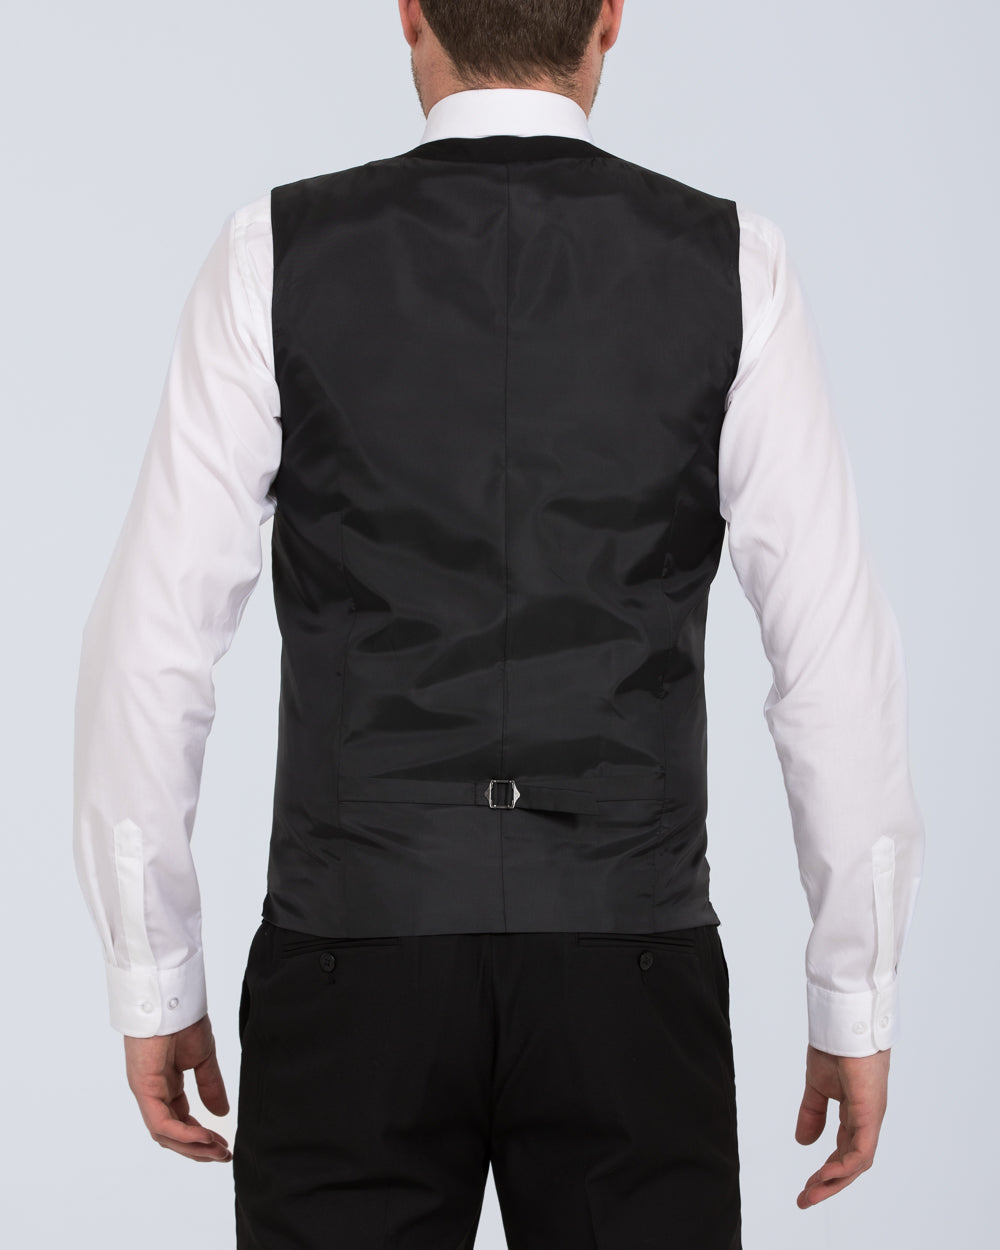 Skopes Romulus Slim Fit Tall Lyfcycle Suit (black)